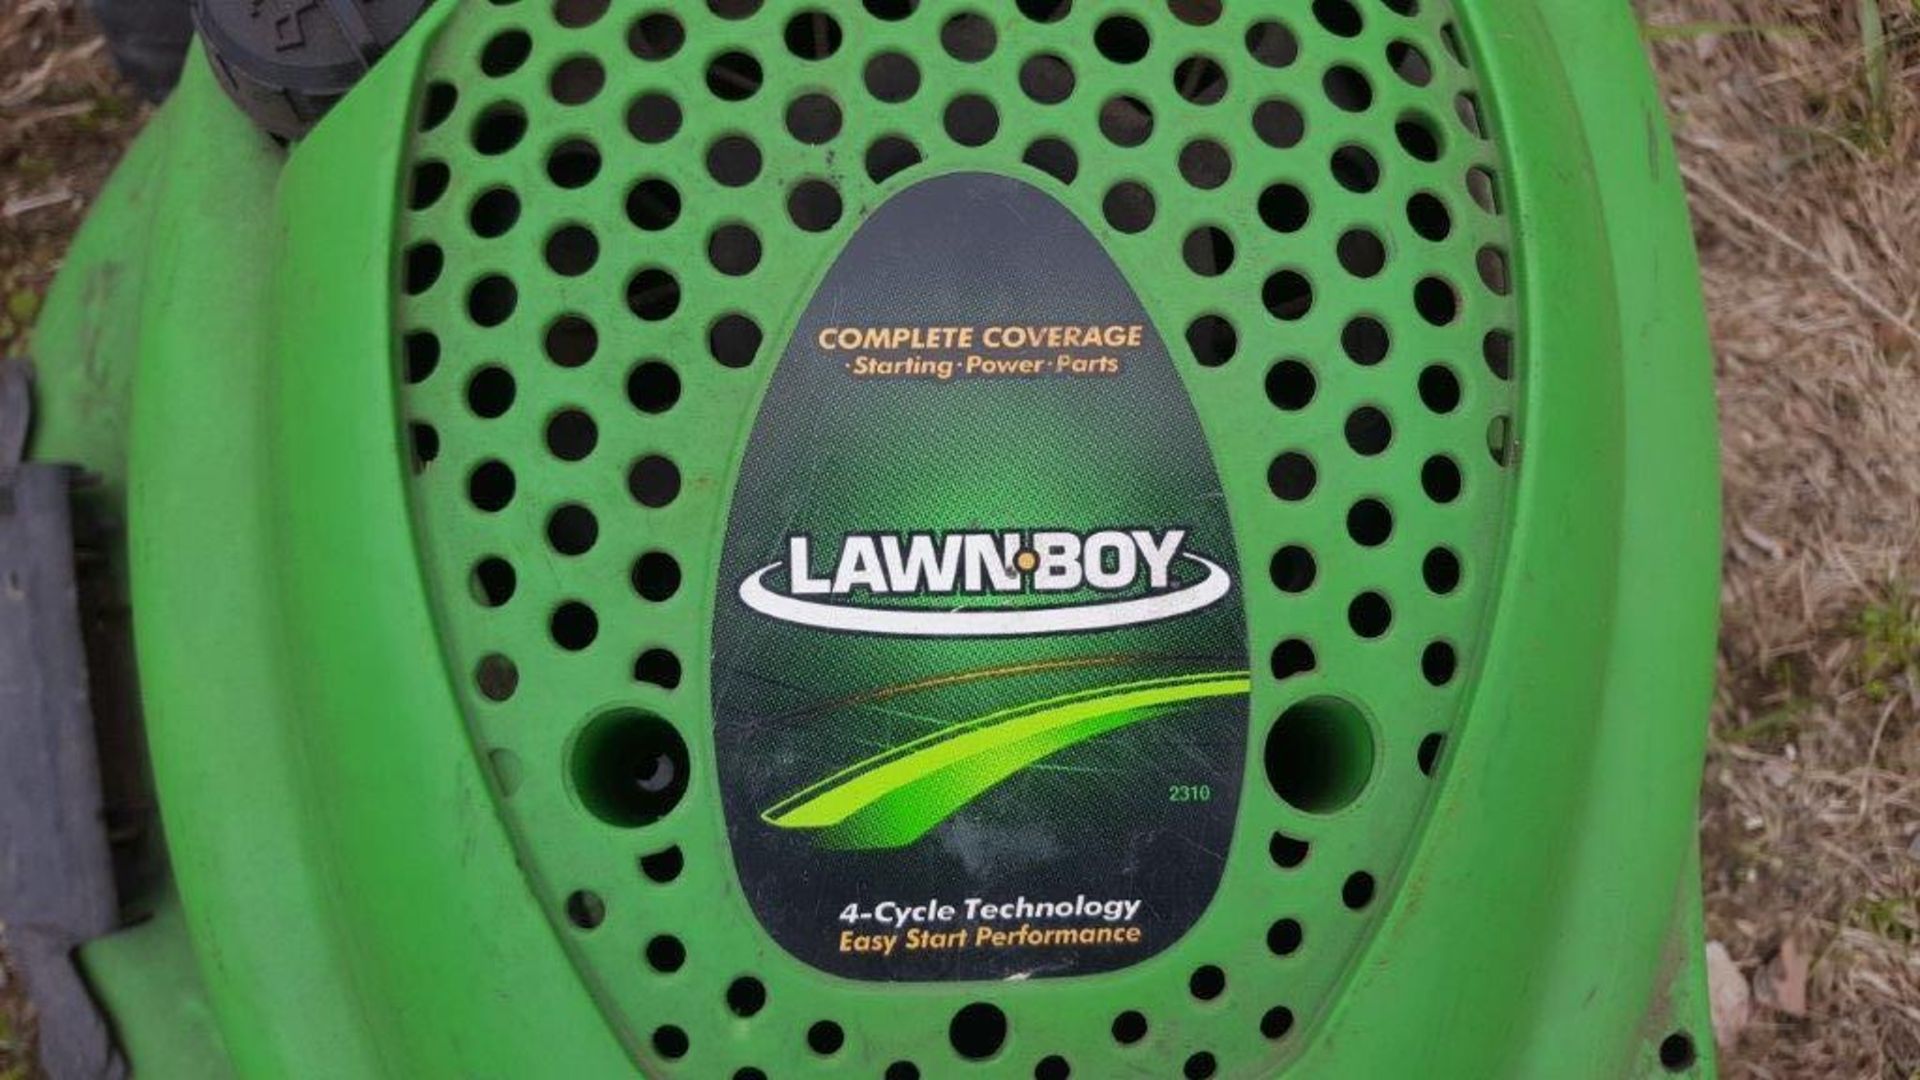 Lawn boy mower - Image 4 of 5